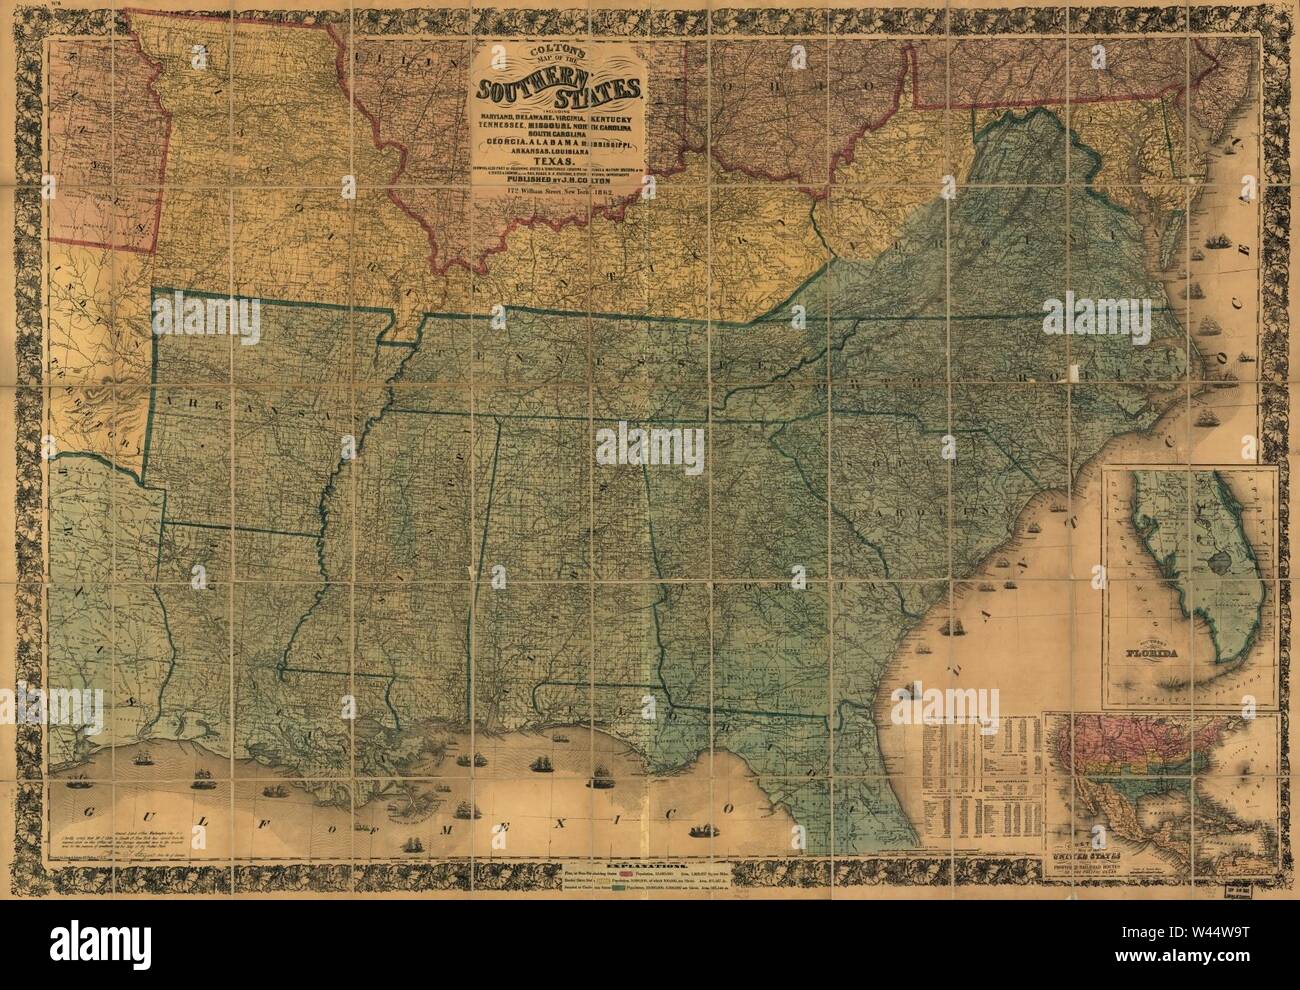 Colton's map of the southern states, including Maryland, Delaware, Virginia, Kentucky, Tennessee, Missouri, North Carolina, South Carolina, Georgia, Alabama, Mississippi, Arkansas, Louisiana, Texas, Stock Photo